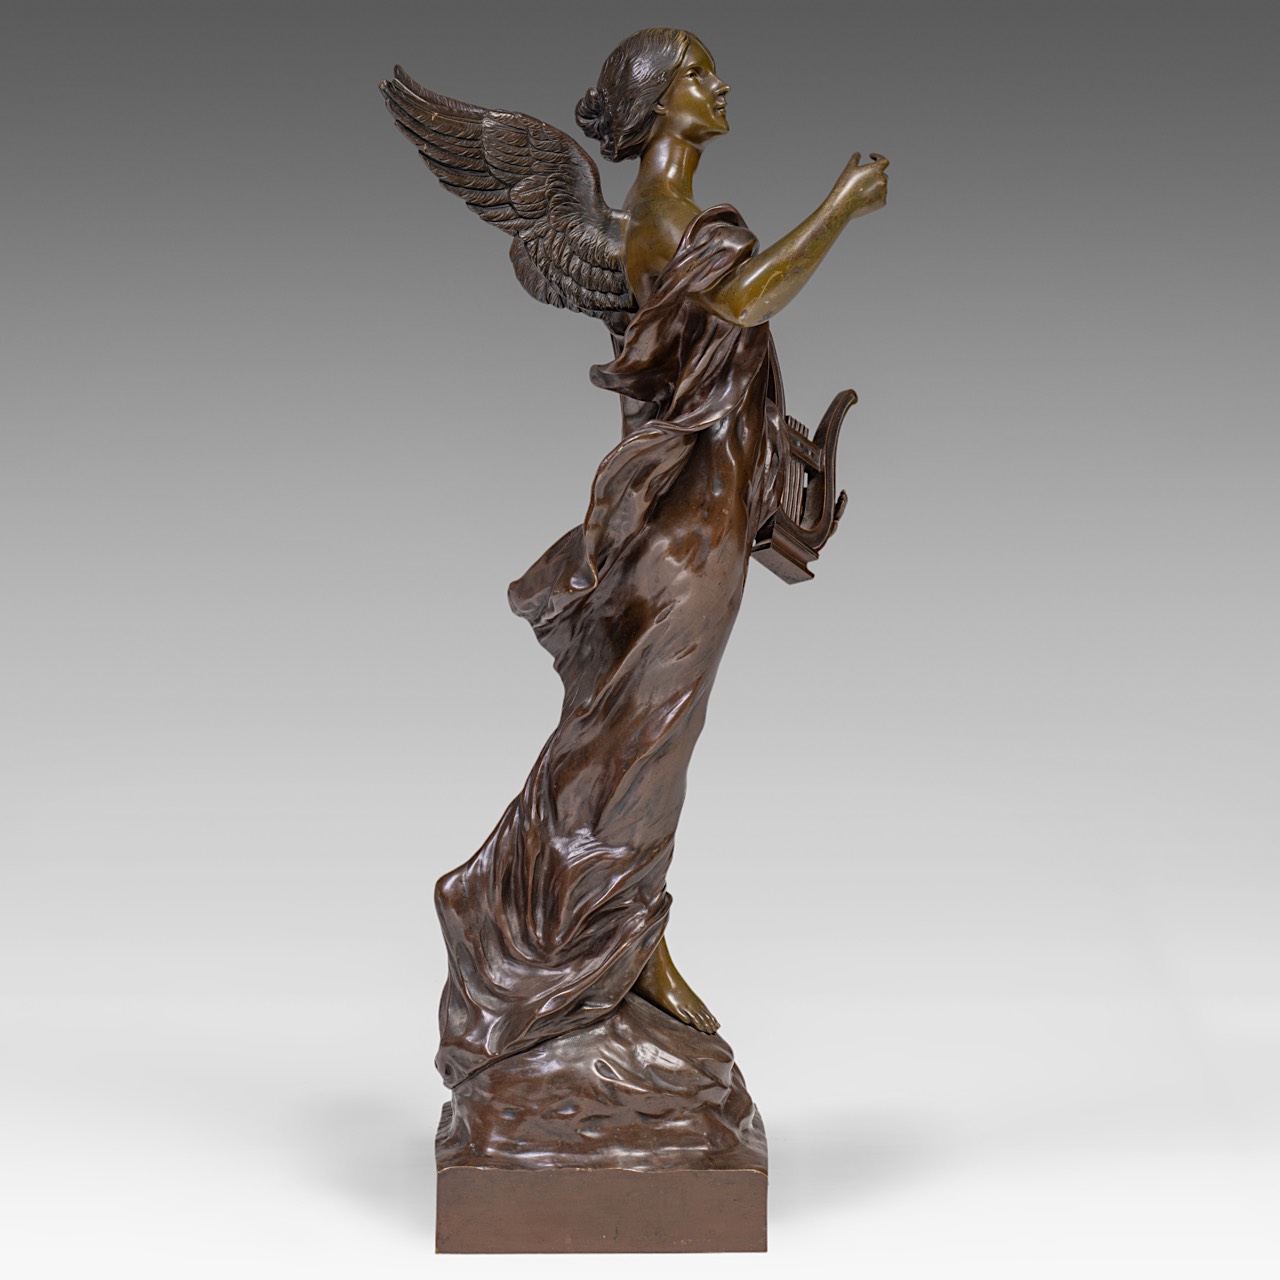 Pierre Etienne Daniel Campagne (1851-1914), 'L'inspiration', patinated bronze, H 85 cm - Image 7 of 26